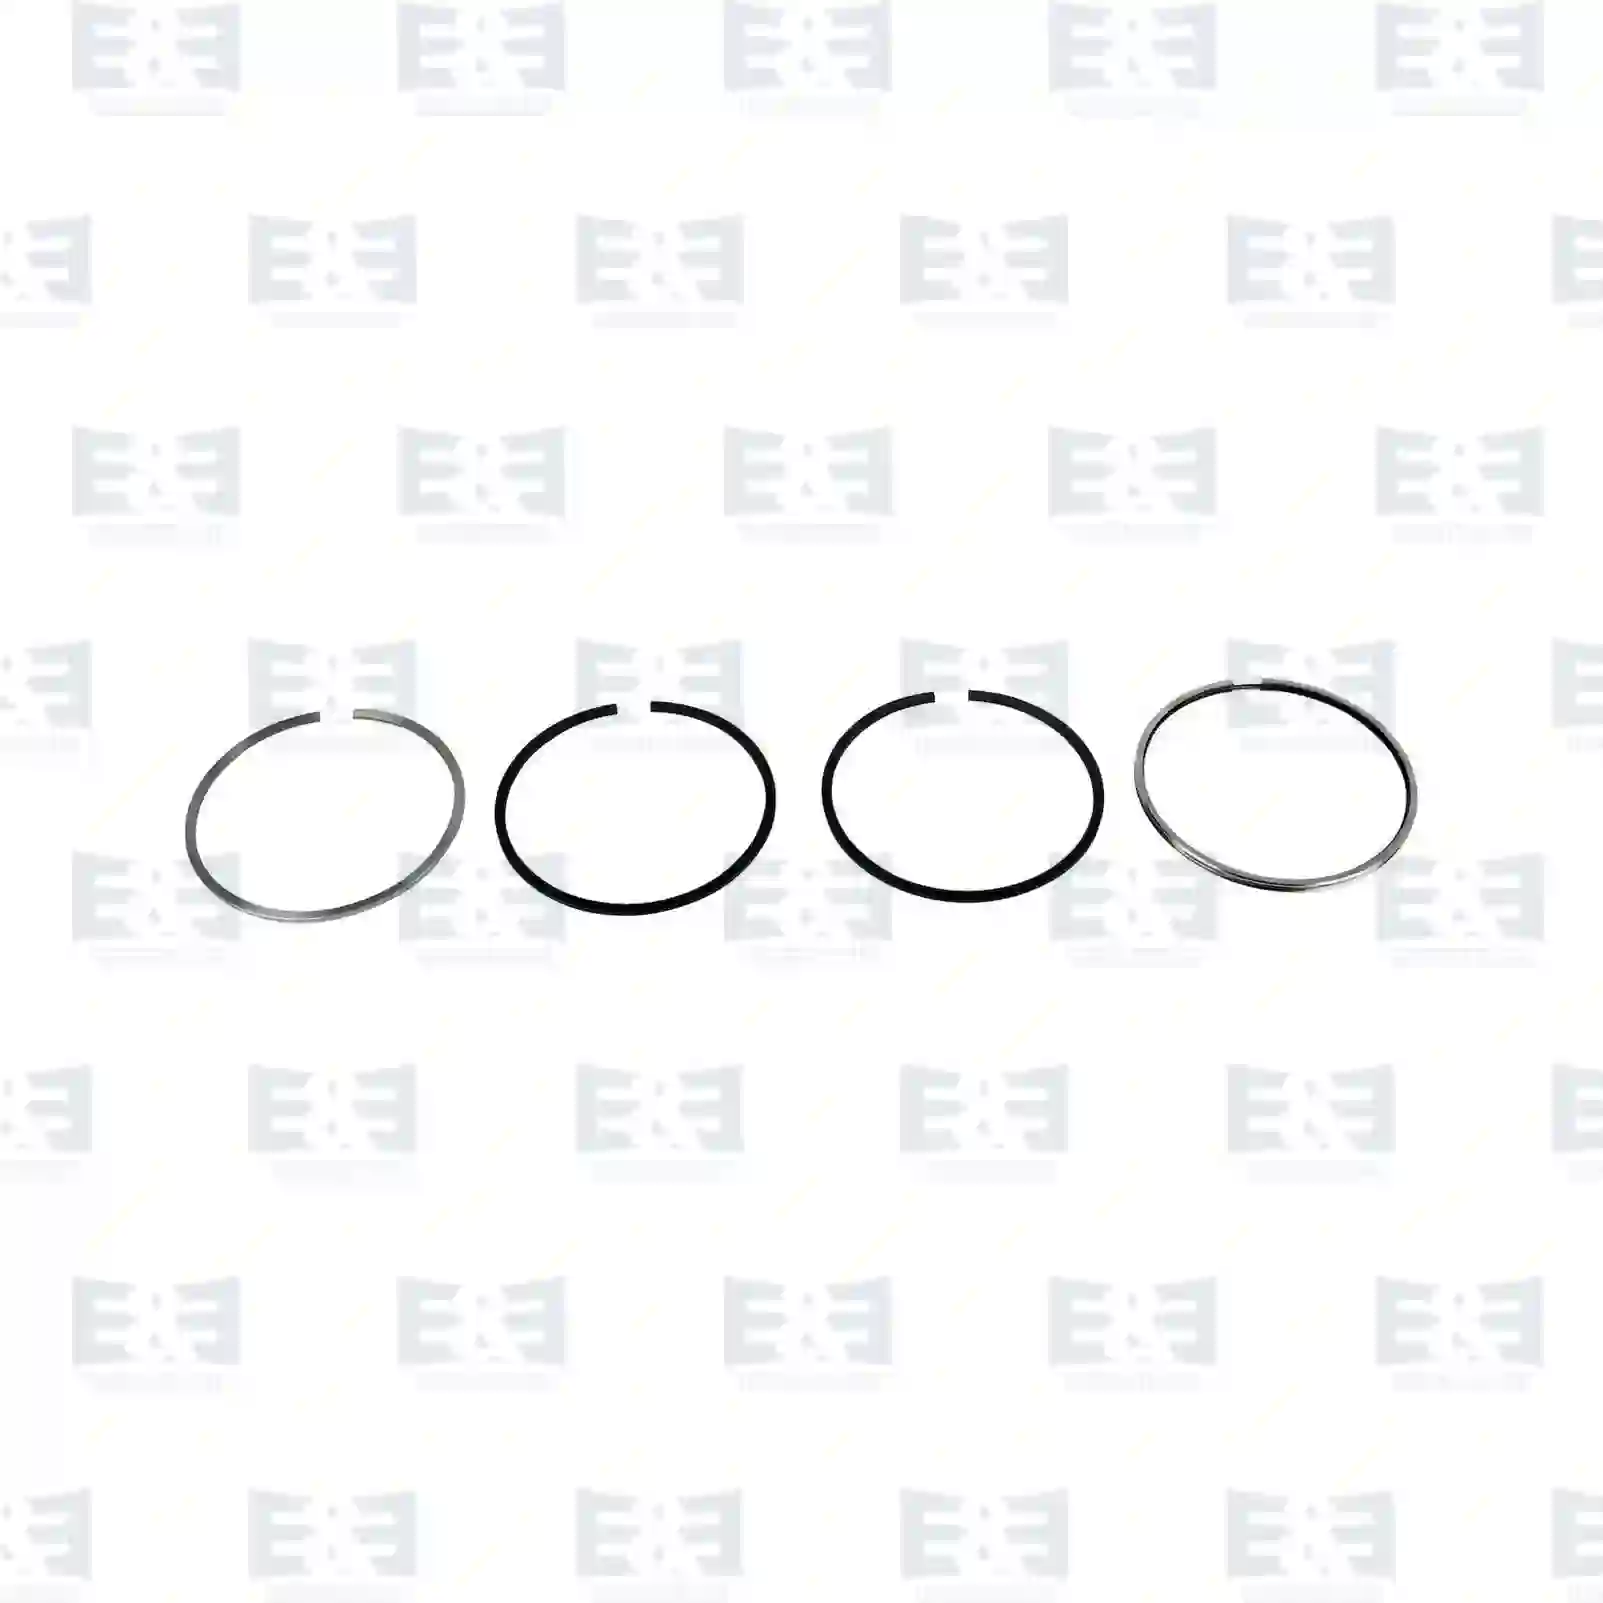  Piston ring kit || E&E Truck Spare Parts | Truck Spare Parts, Auotomotive Spare Parts